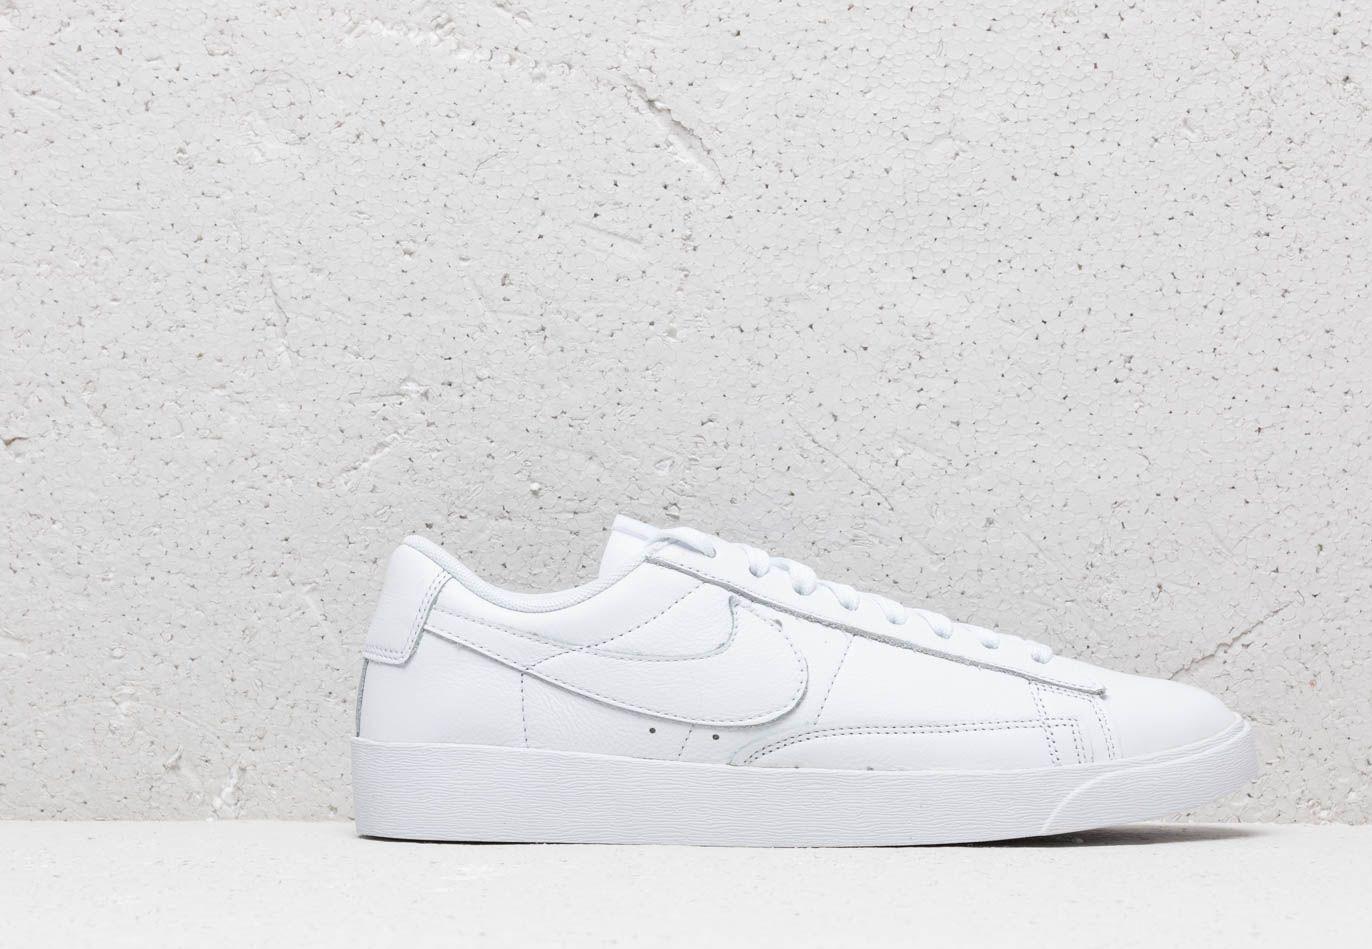 Nike Leather Blazer Low Le Shoes in White,White,White (White) | Lyst